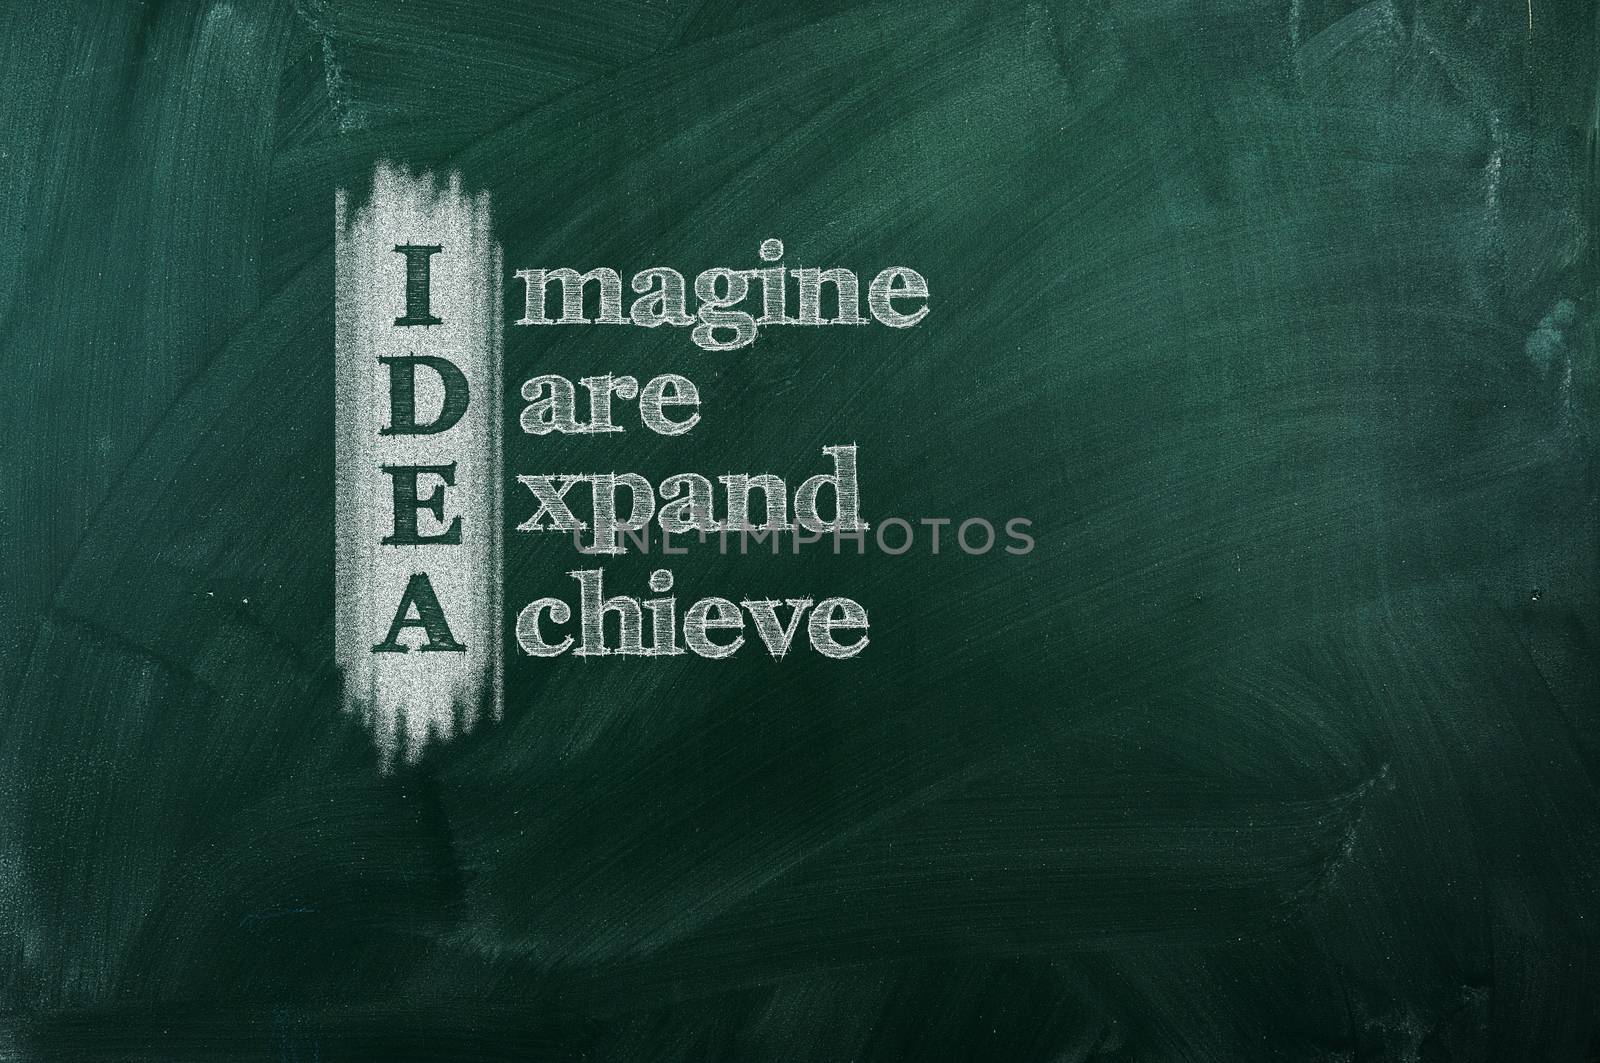 IDEA acronym -" Imagine,Dare,Expand,Achieve". Drawn with chalk on a blackboard 